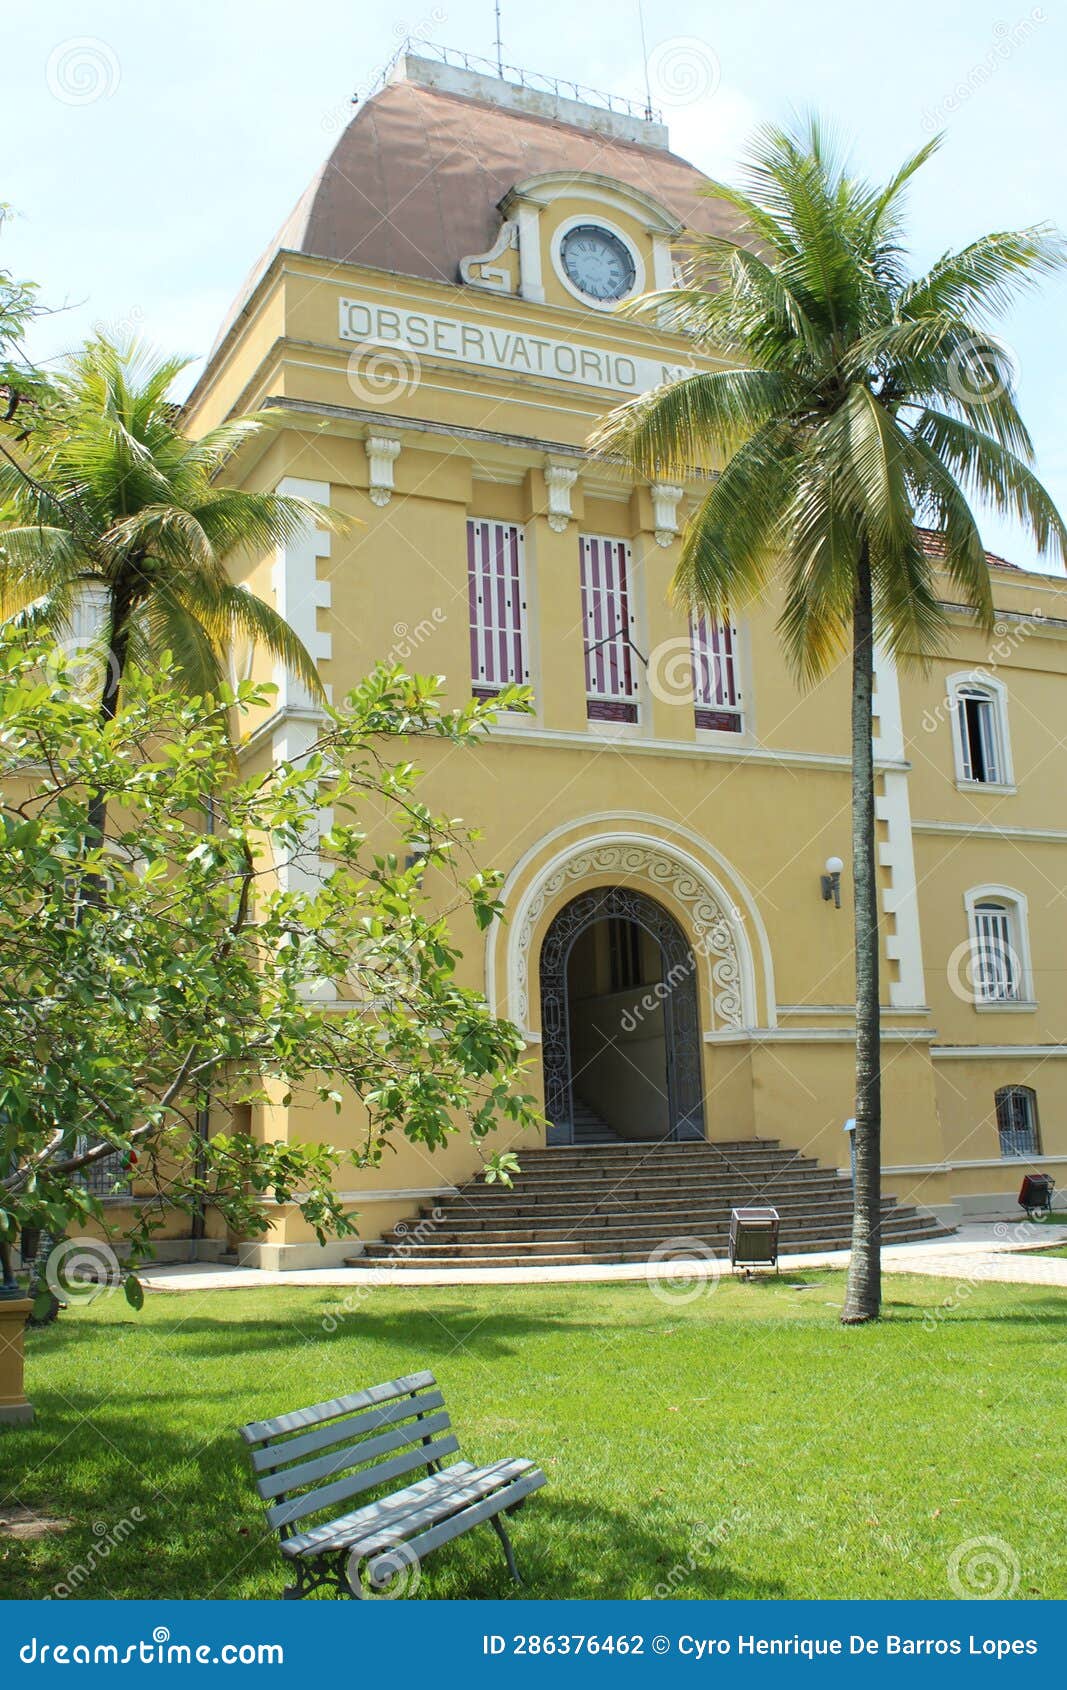 national observatory of rio de janeiro, natural history museum, south america, brazil